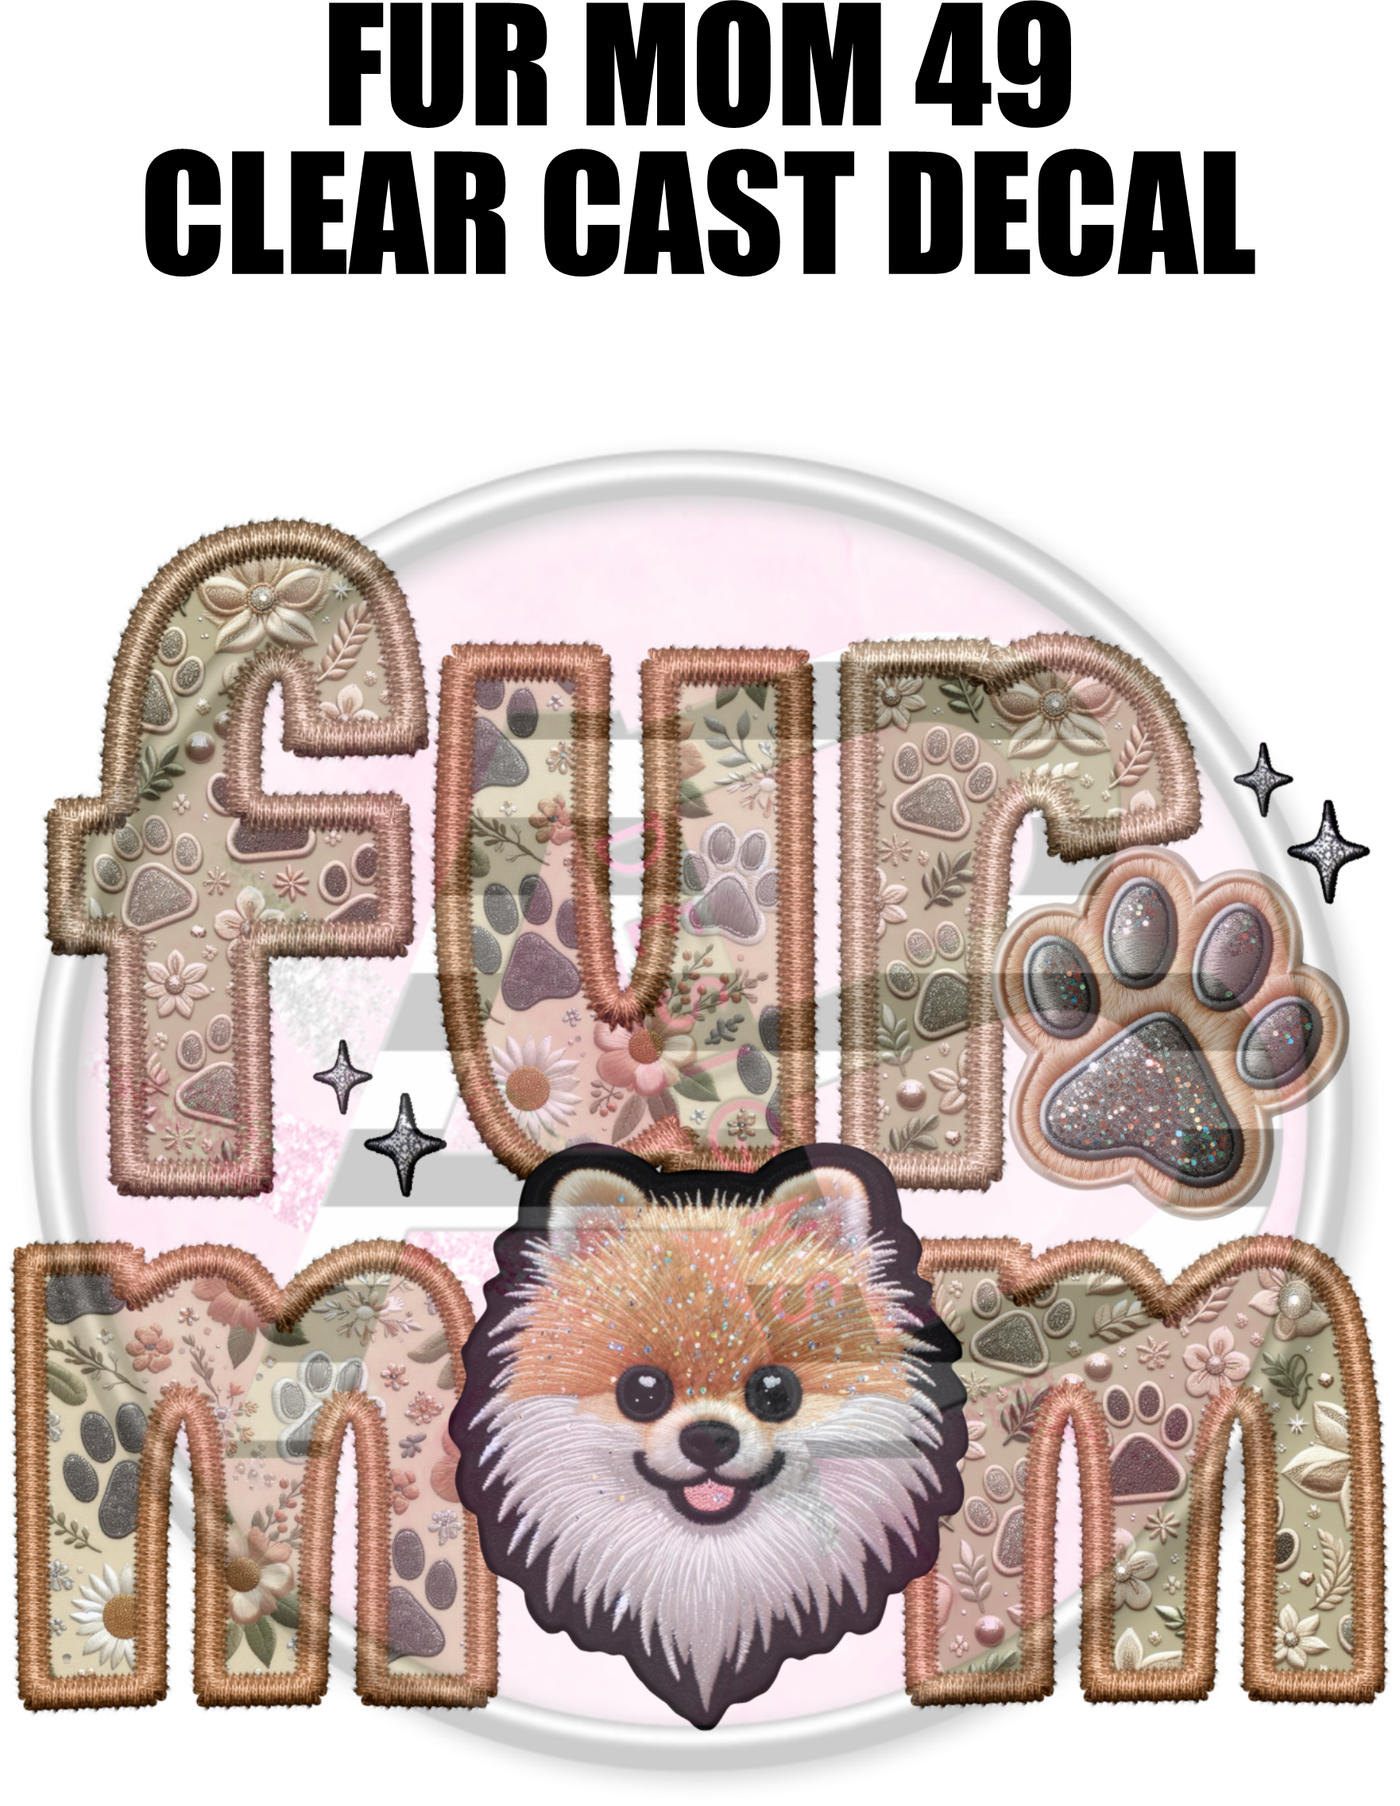 Fur Mom 49 - Clear Cast Decal